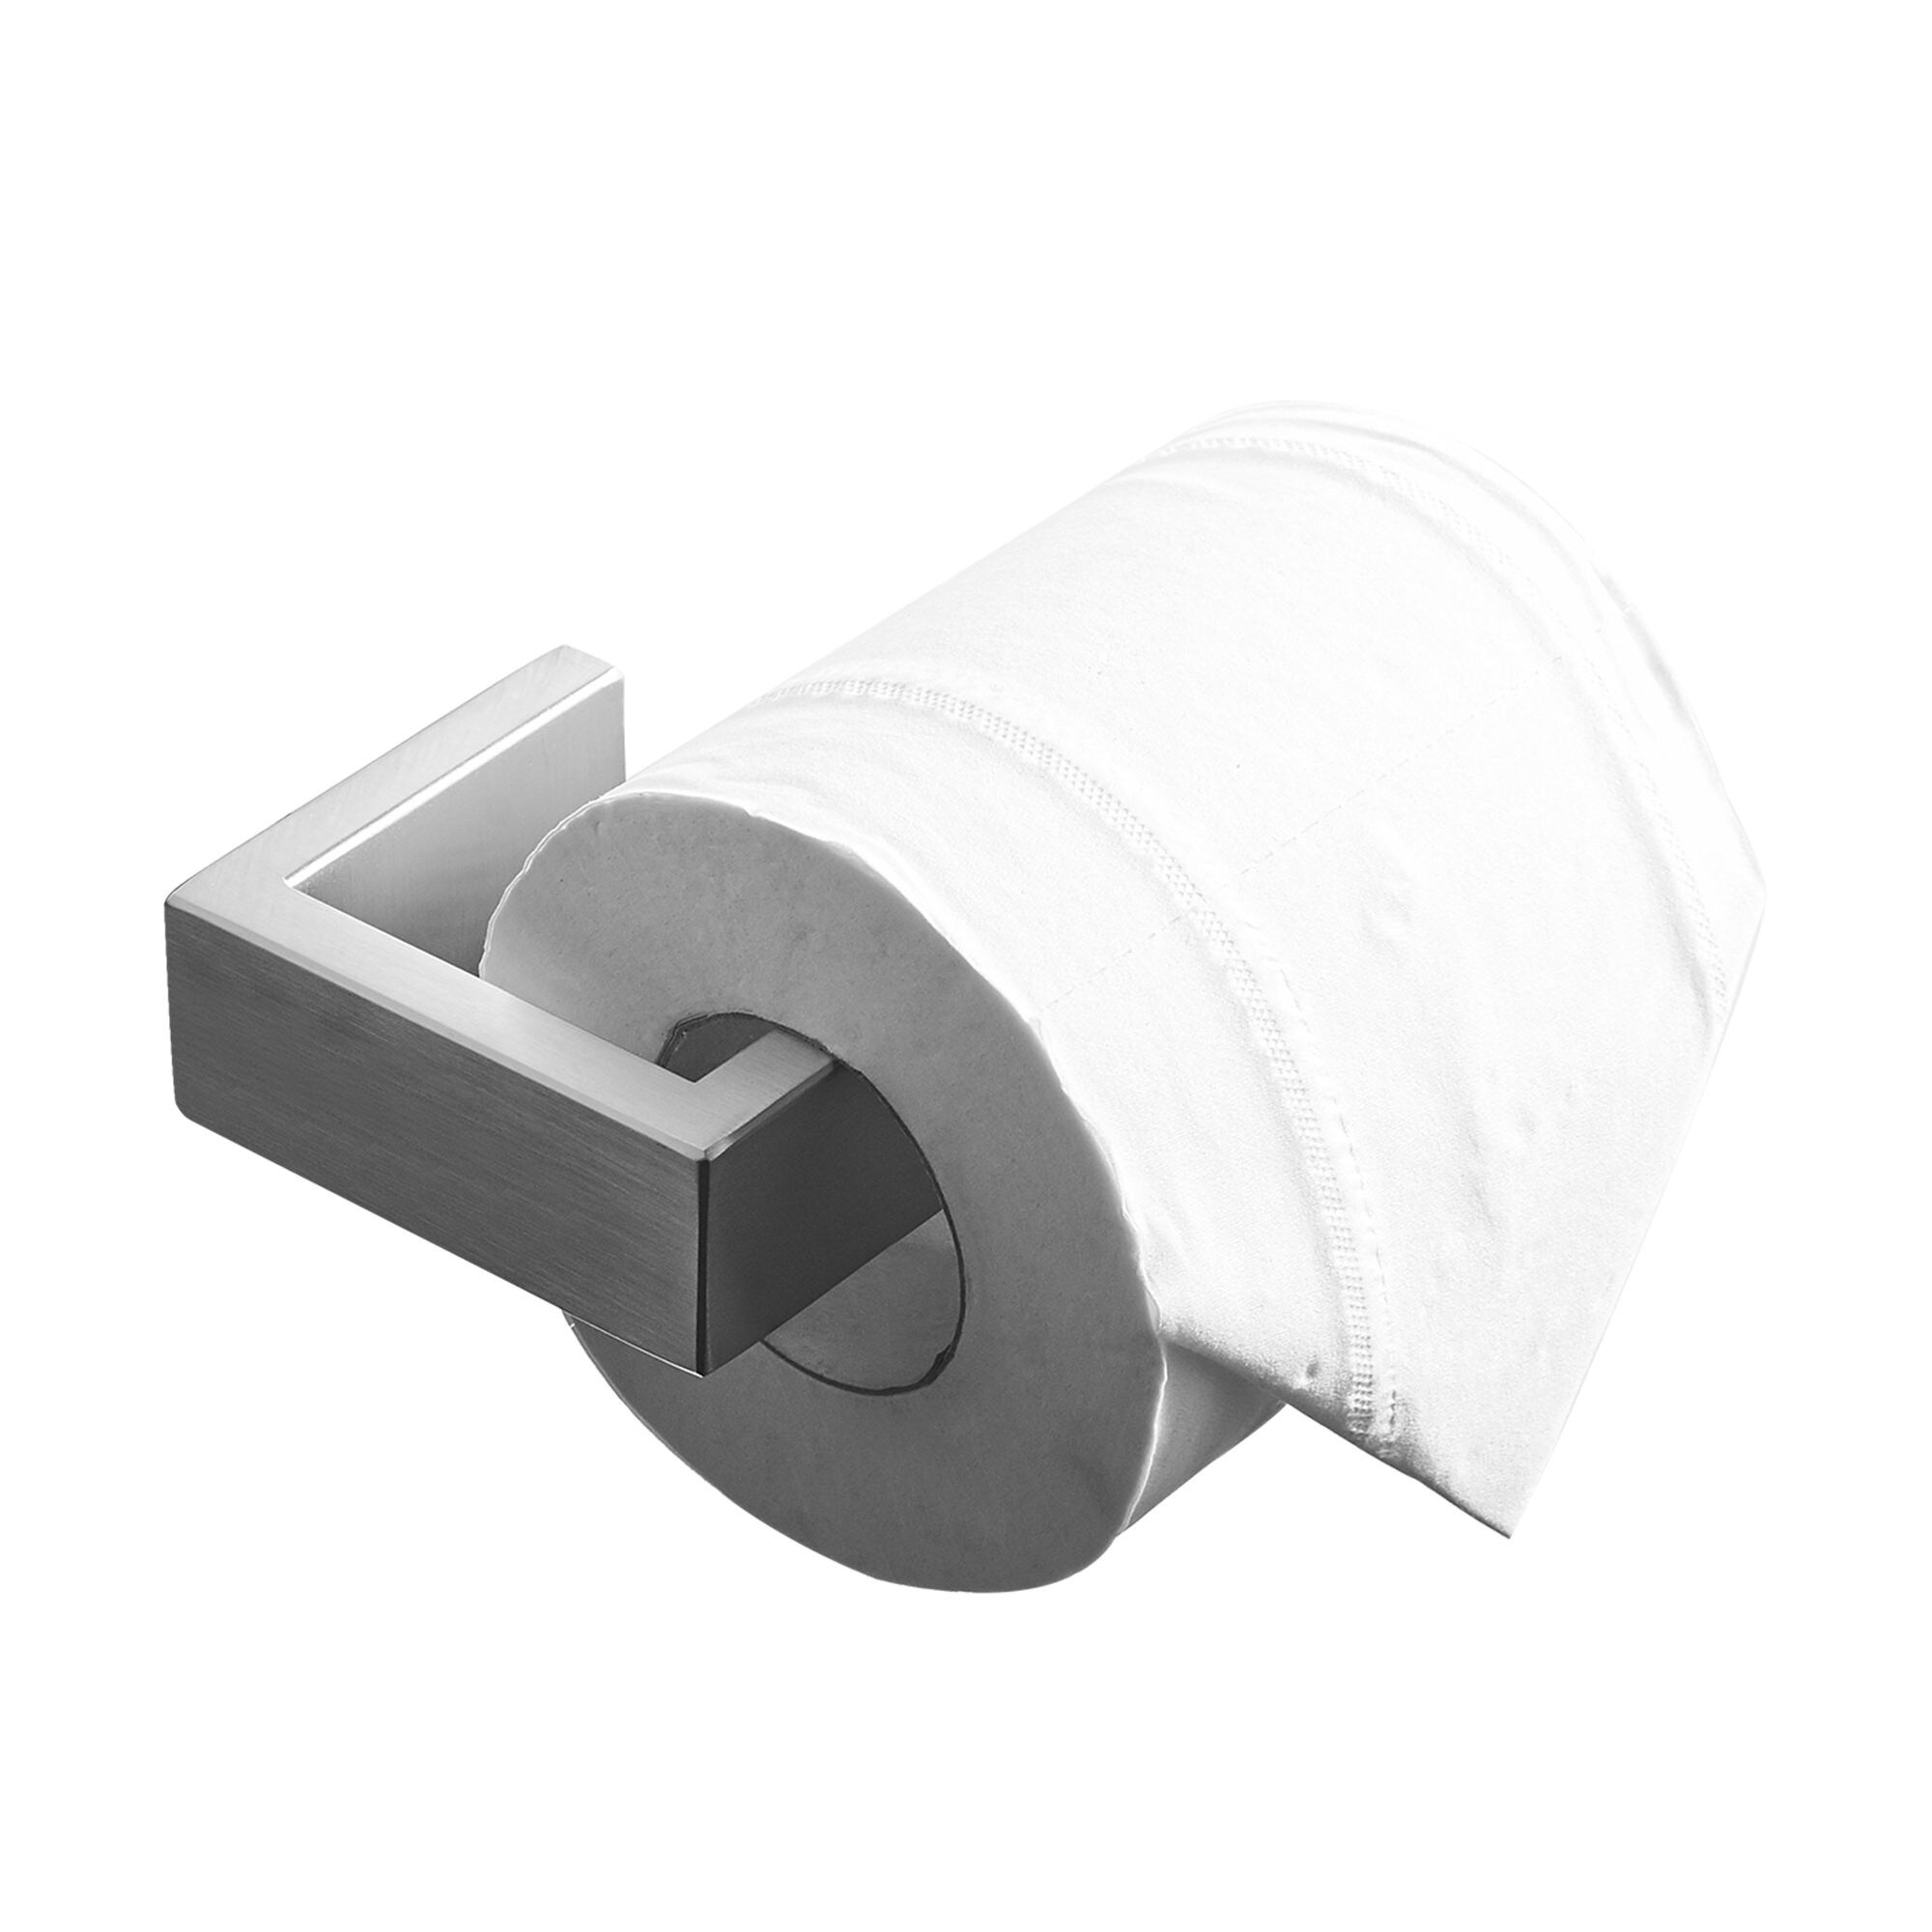 https://ak1.ostkcdn.com/images/products/is/images/direct/3dd466ec9c76cdf49417eba7b3c3743b8ab15dba/Wall-Mount-Bathroom-Toilet-Paper-Holder-in-Brushed-Nickel.jpg